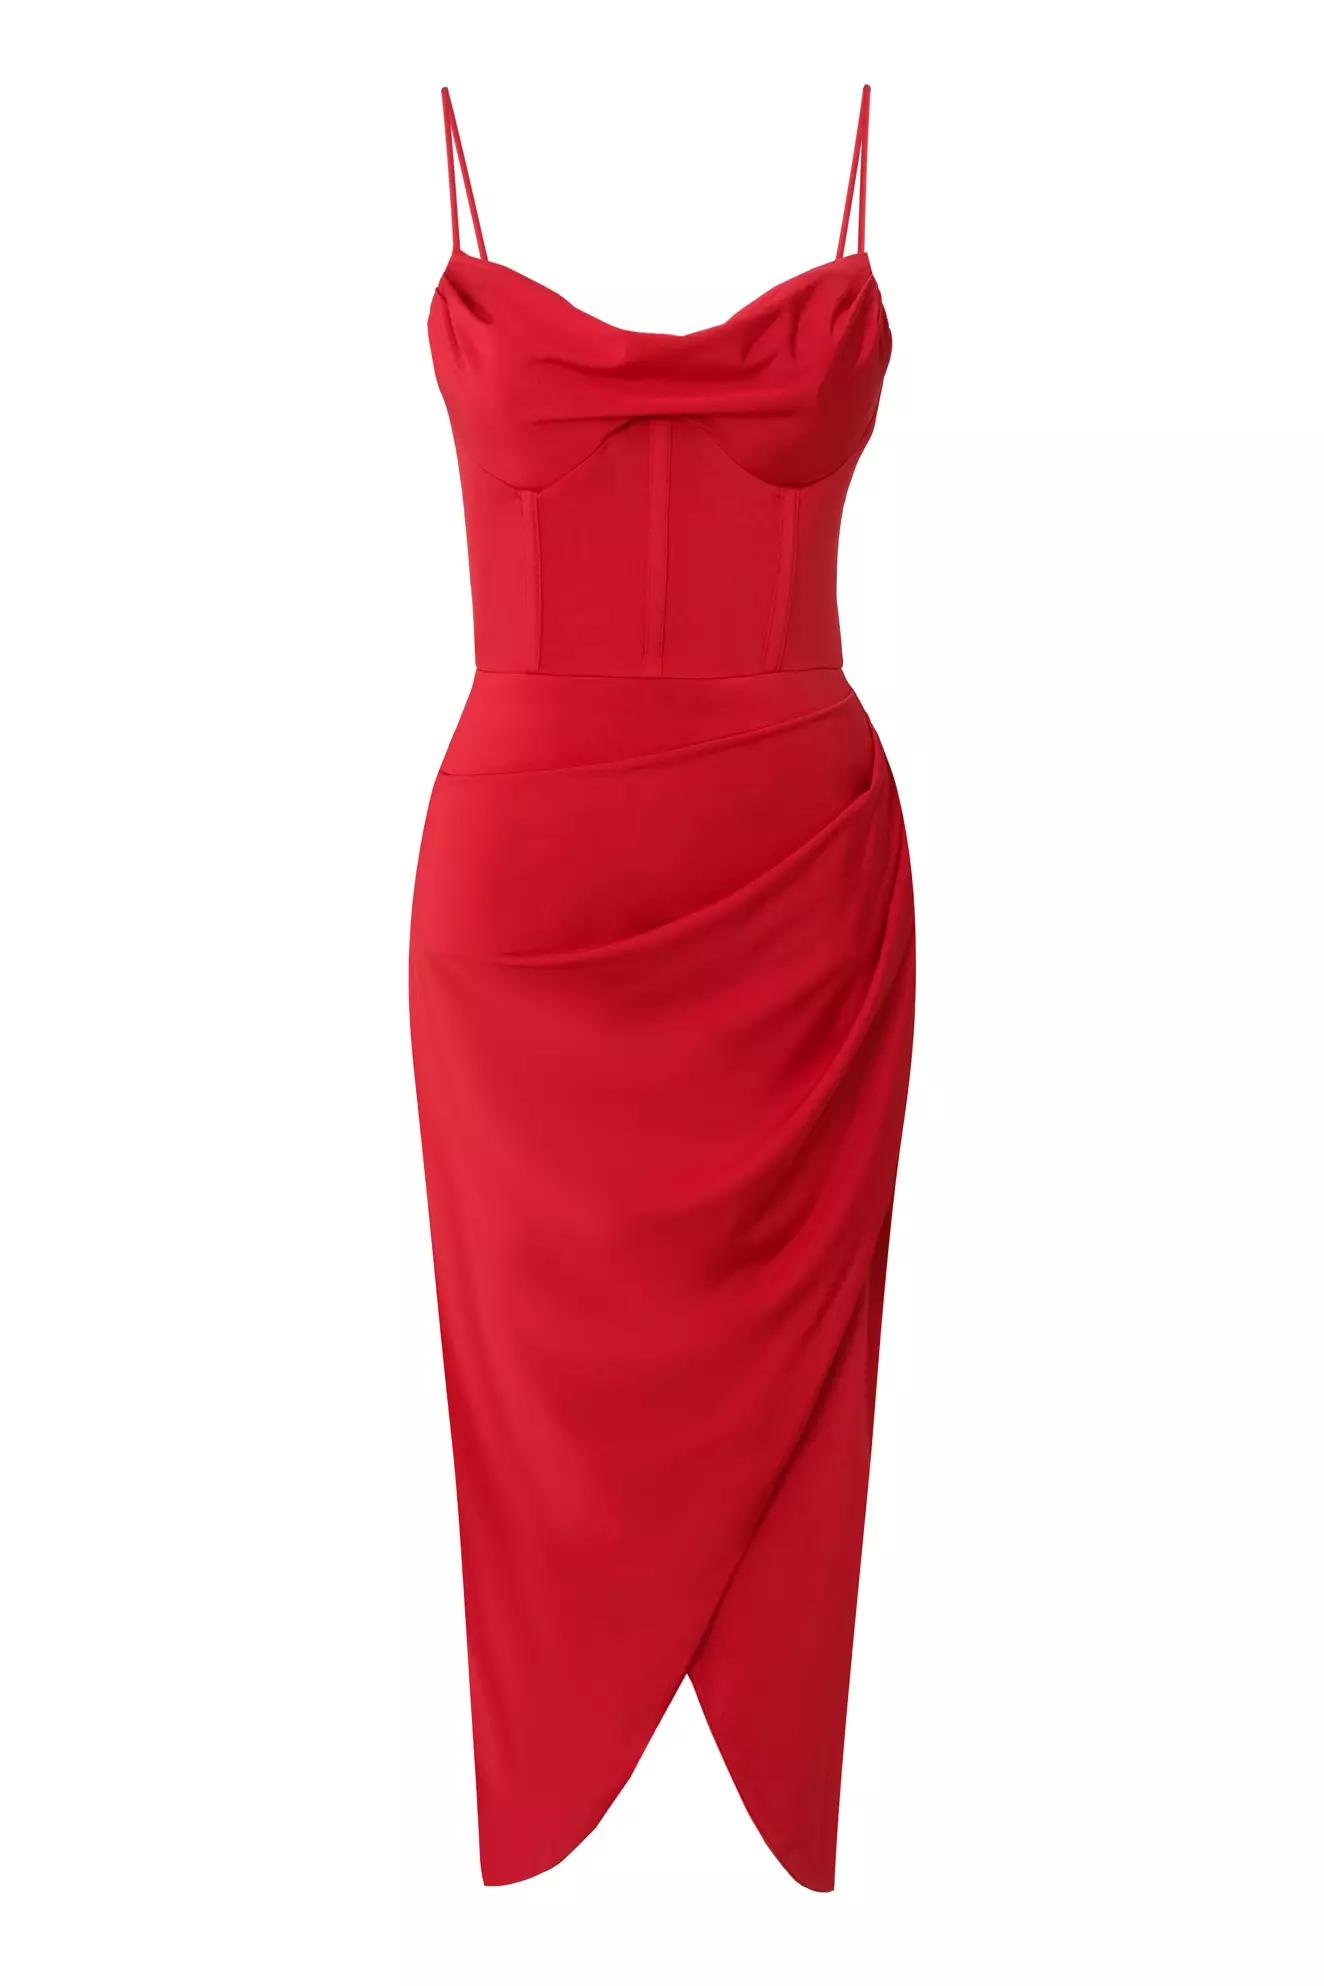 Red sendy sleeveless long dress